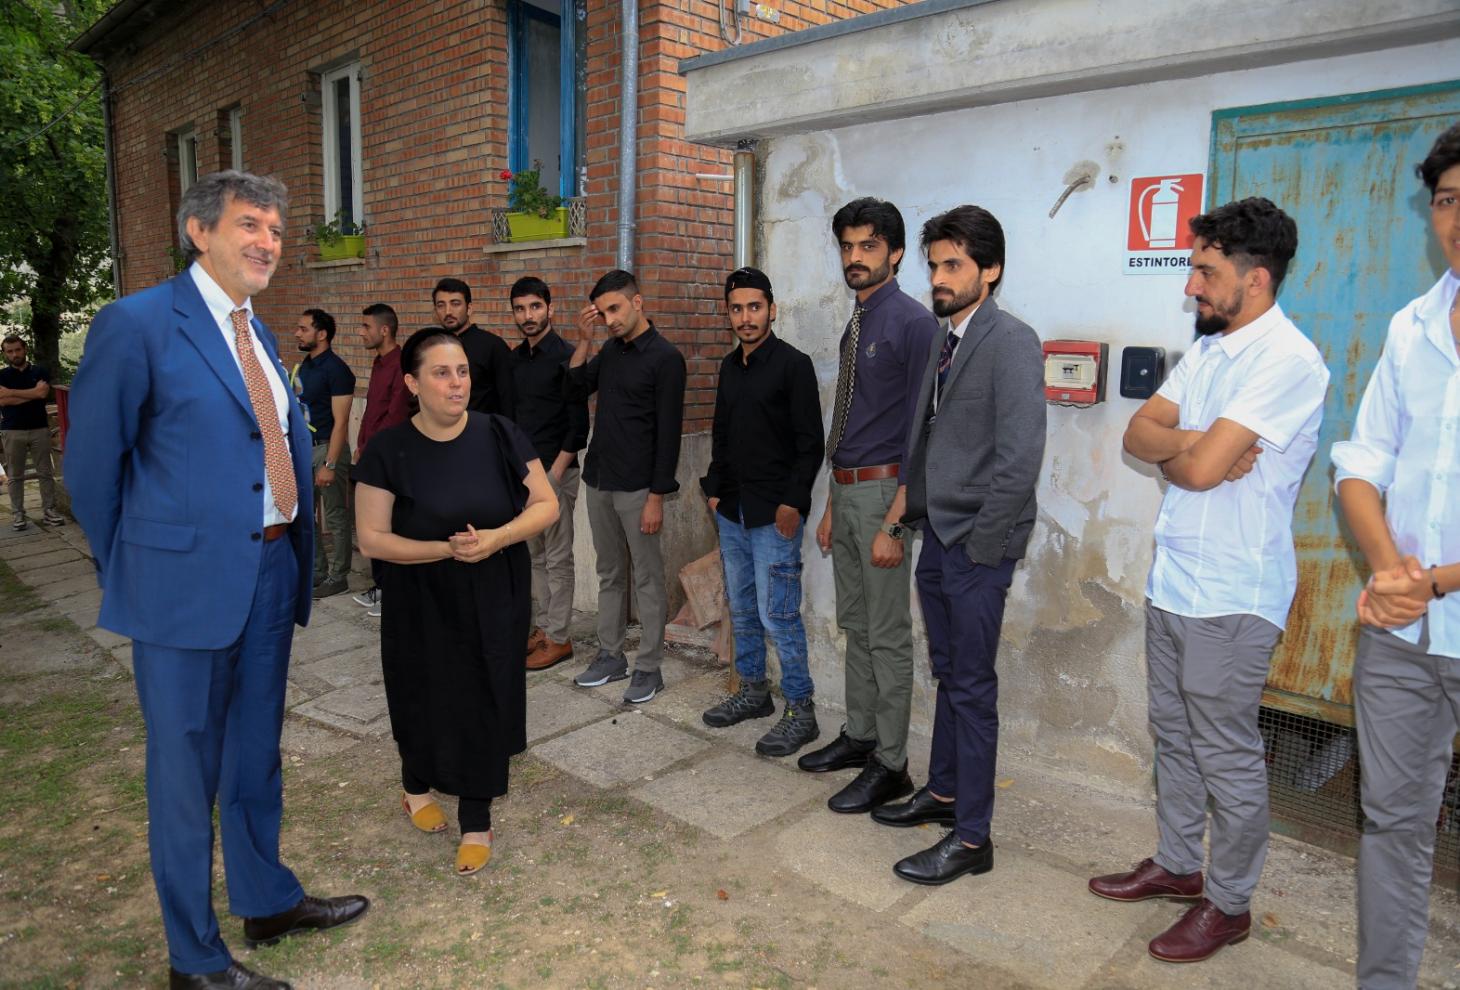 Marco Marsilio, Simona Fernandez e gli studenti afghani